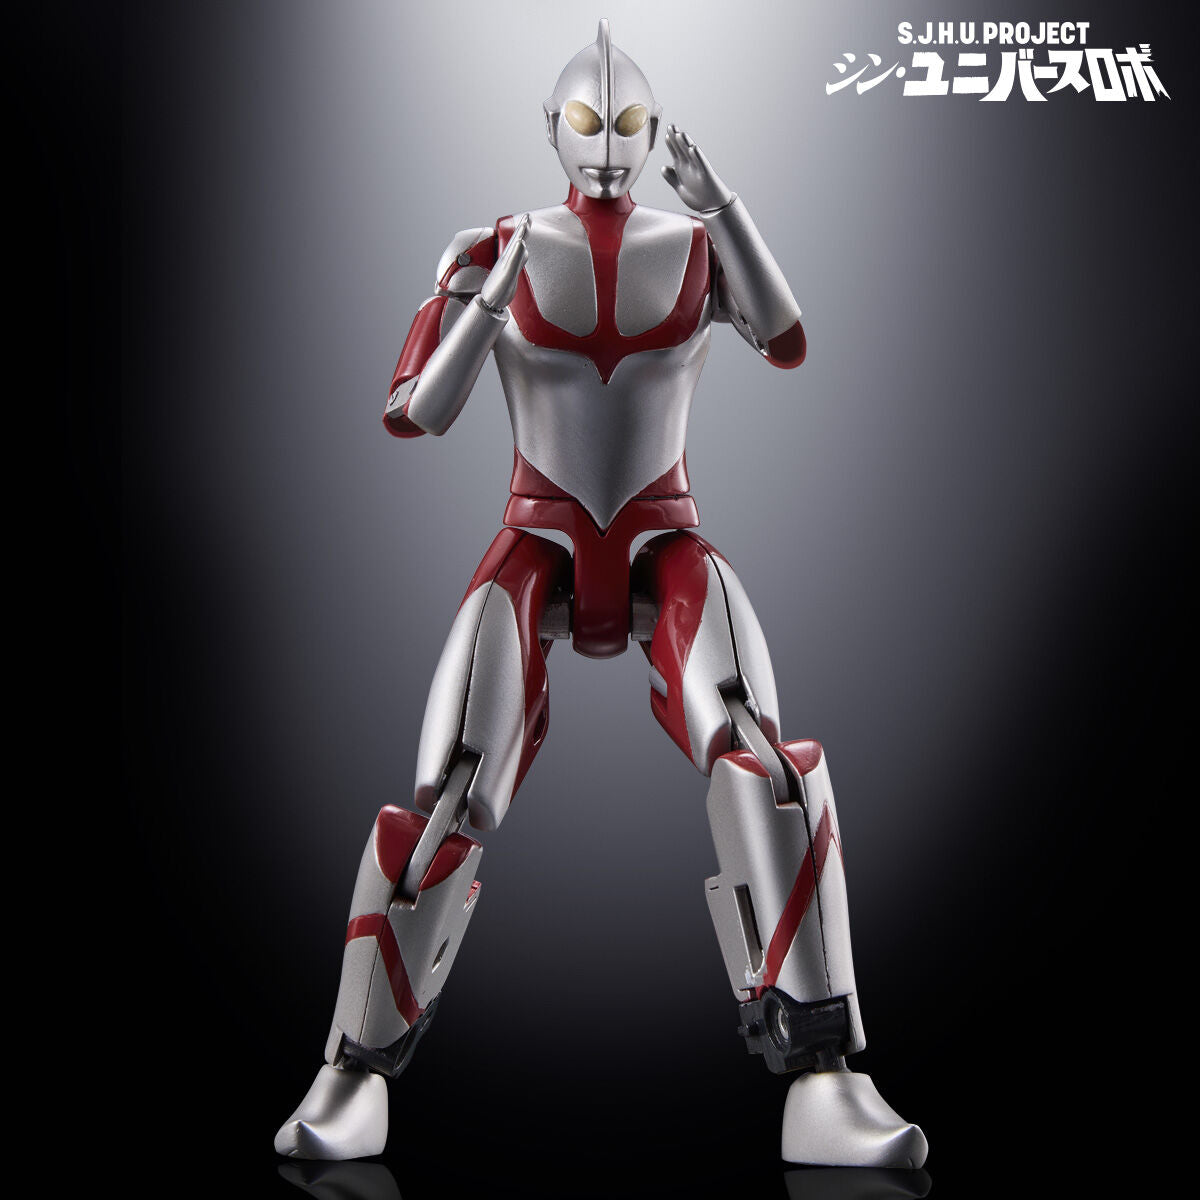 [PREORDER] S.J.H.U. Project Shin Universe Robo